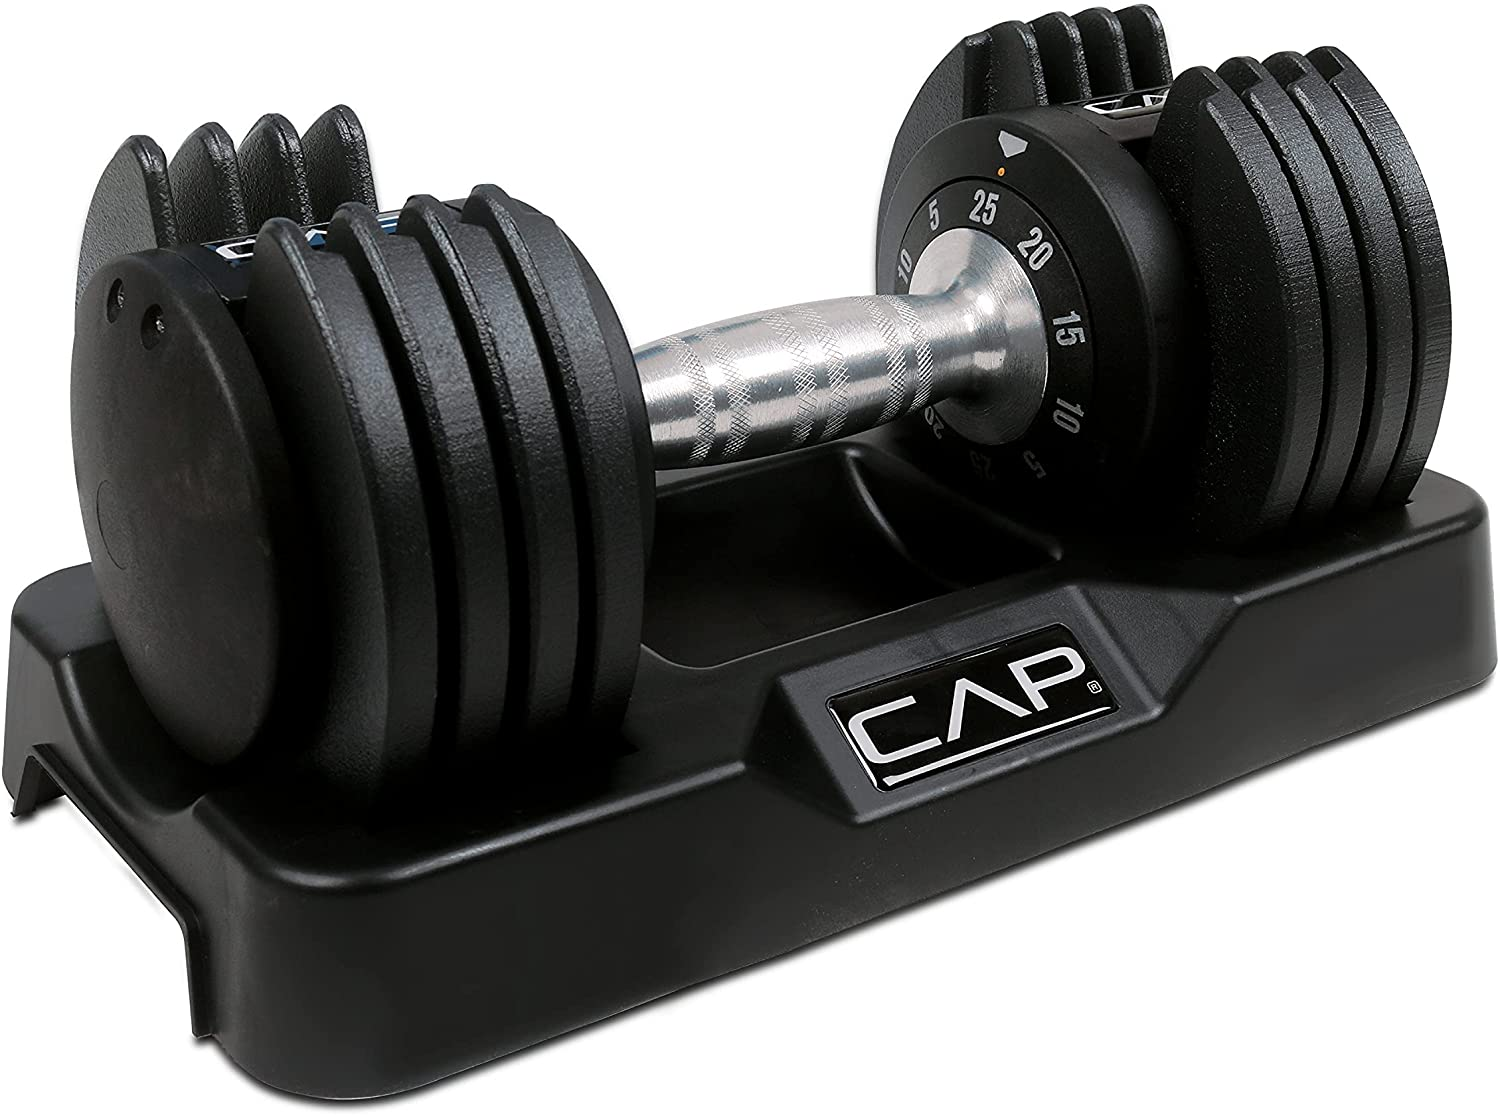 Cap Single 25 lb ADJUSTABELL Adjustable Dumbbell with Contoured Full Rotation Handle, Black, 5-25LB Adjustable Dumbbell $97.02